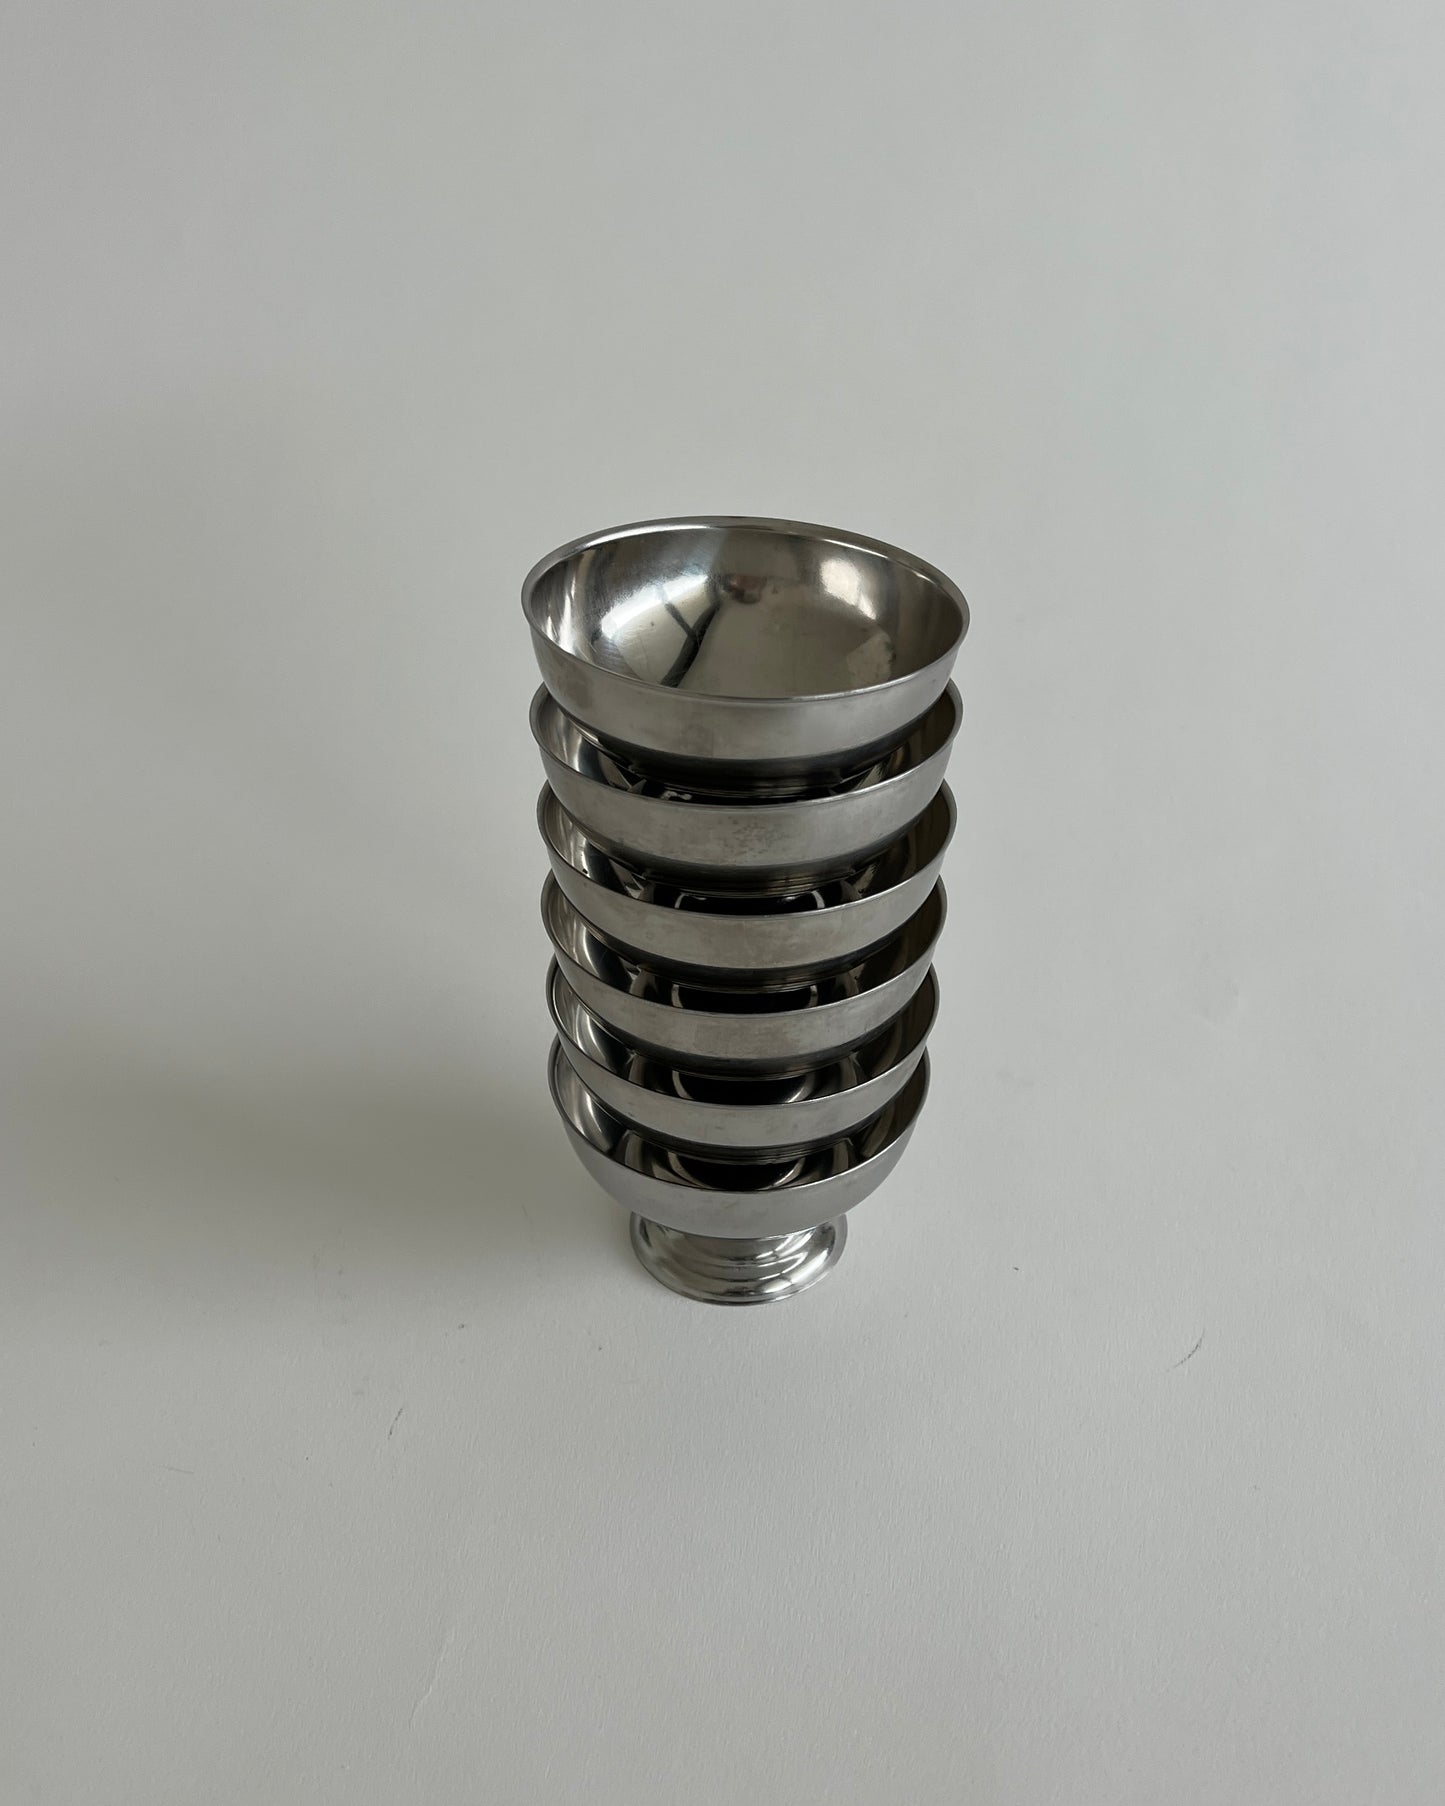 Steel Cup